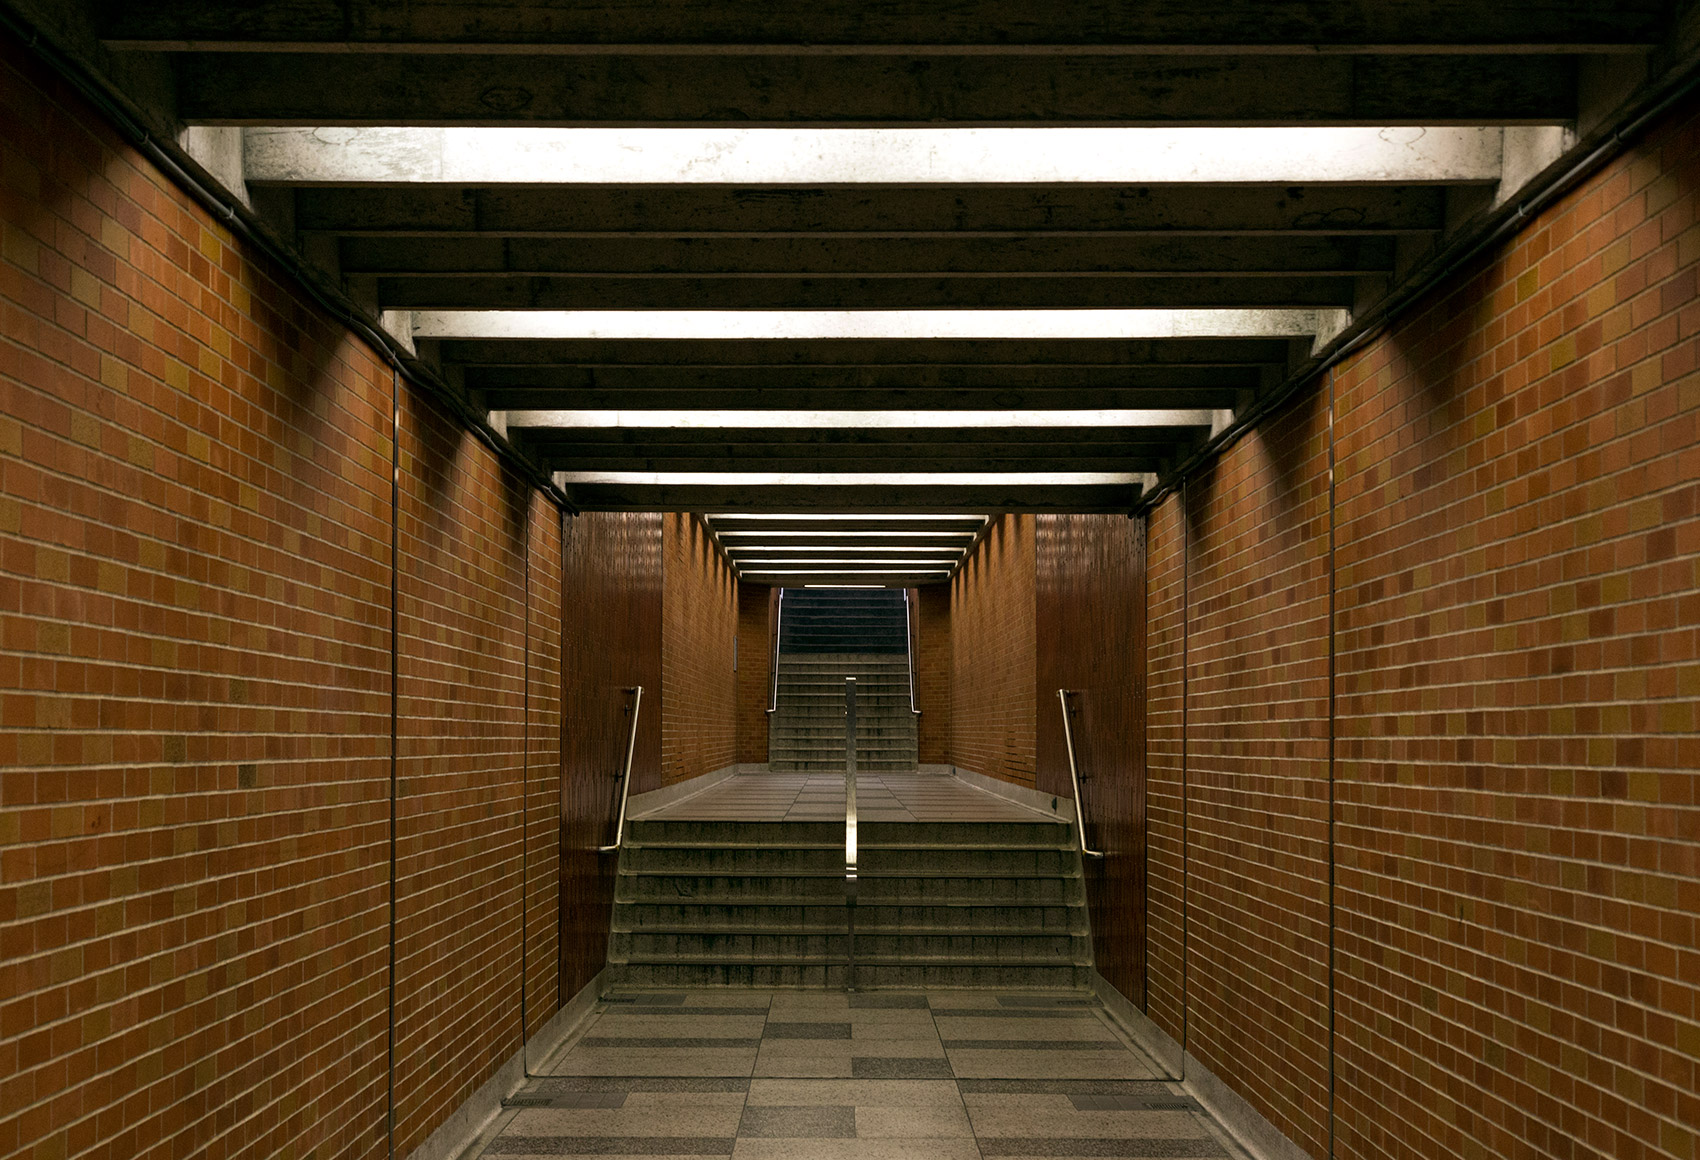 20150722. An appealing subterranean passageway at Toronto's Wils